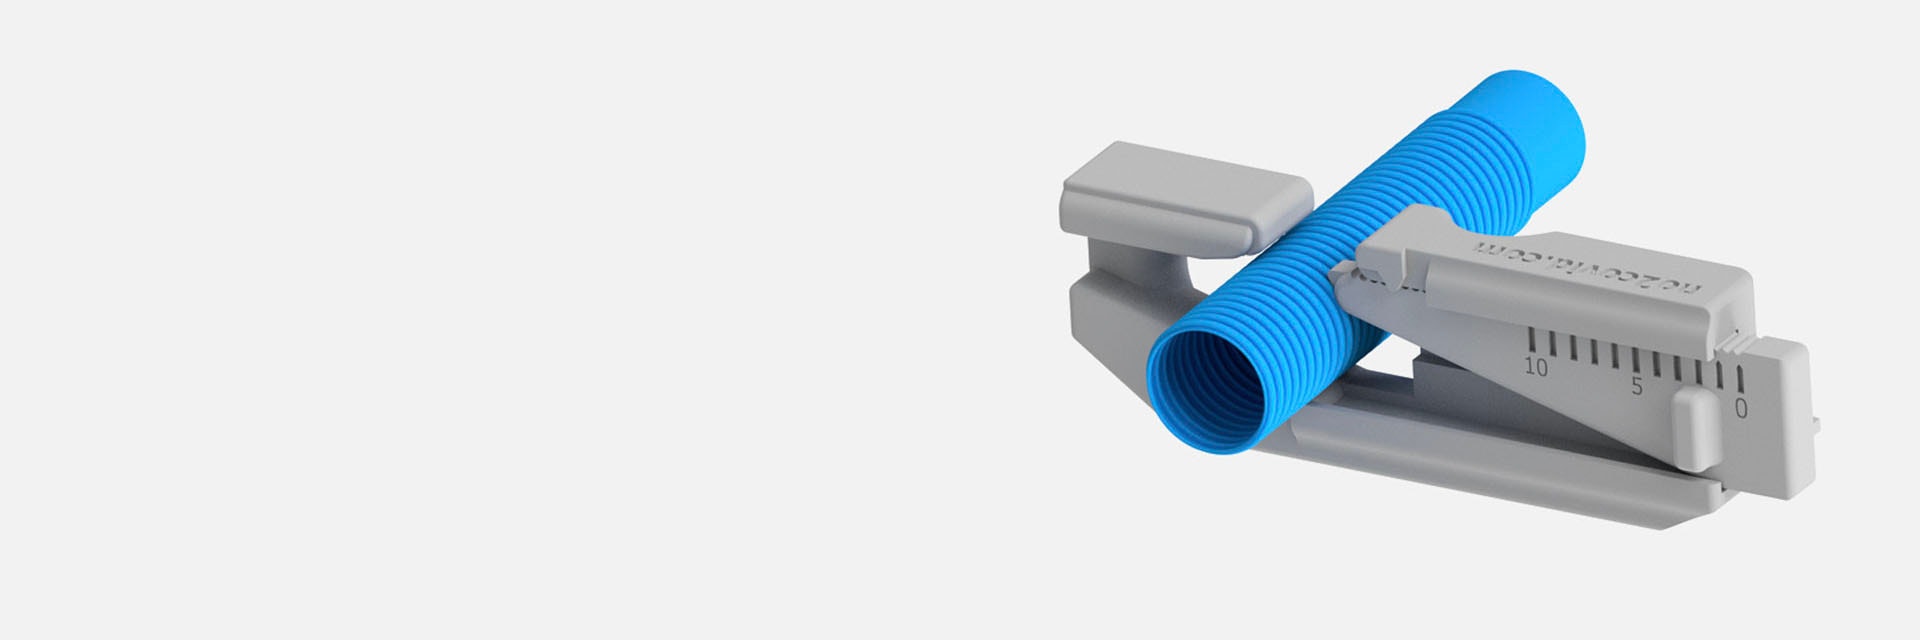 3D-printed ventilator valve